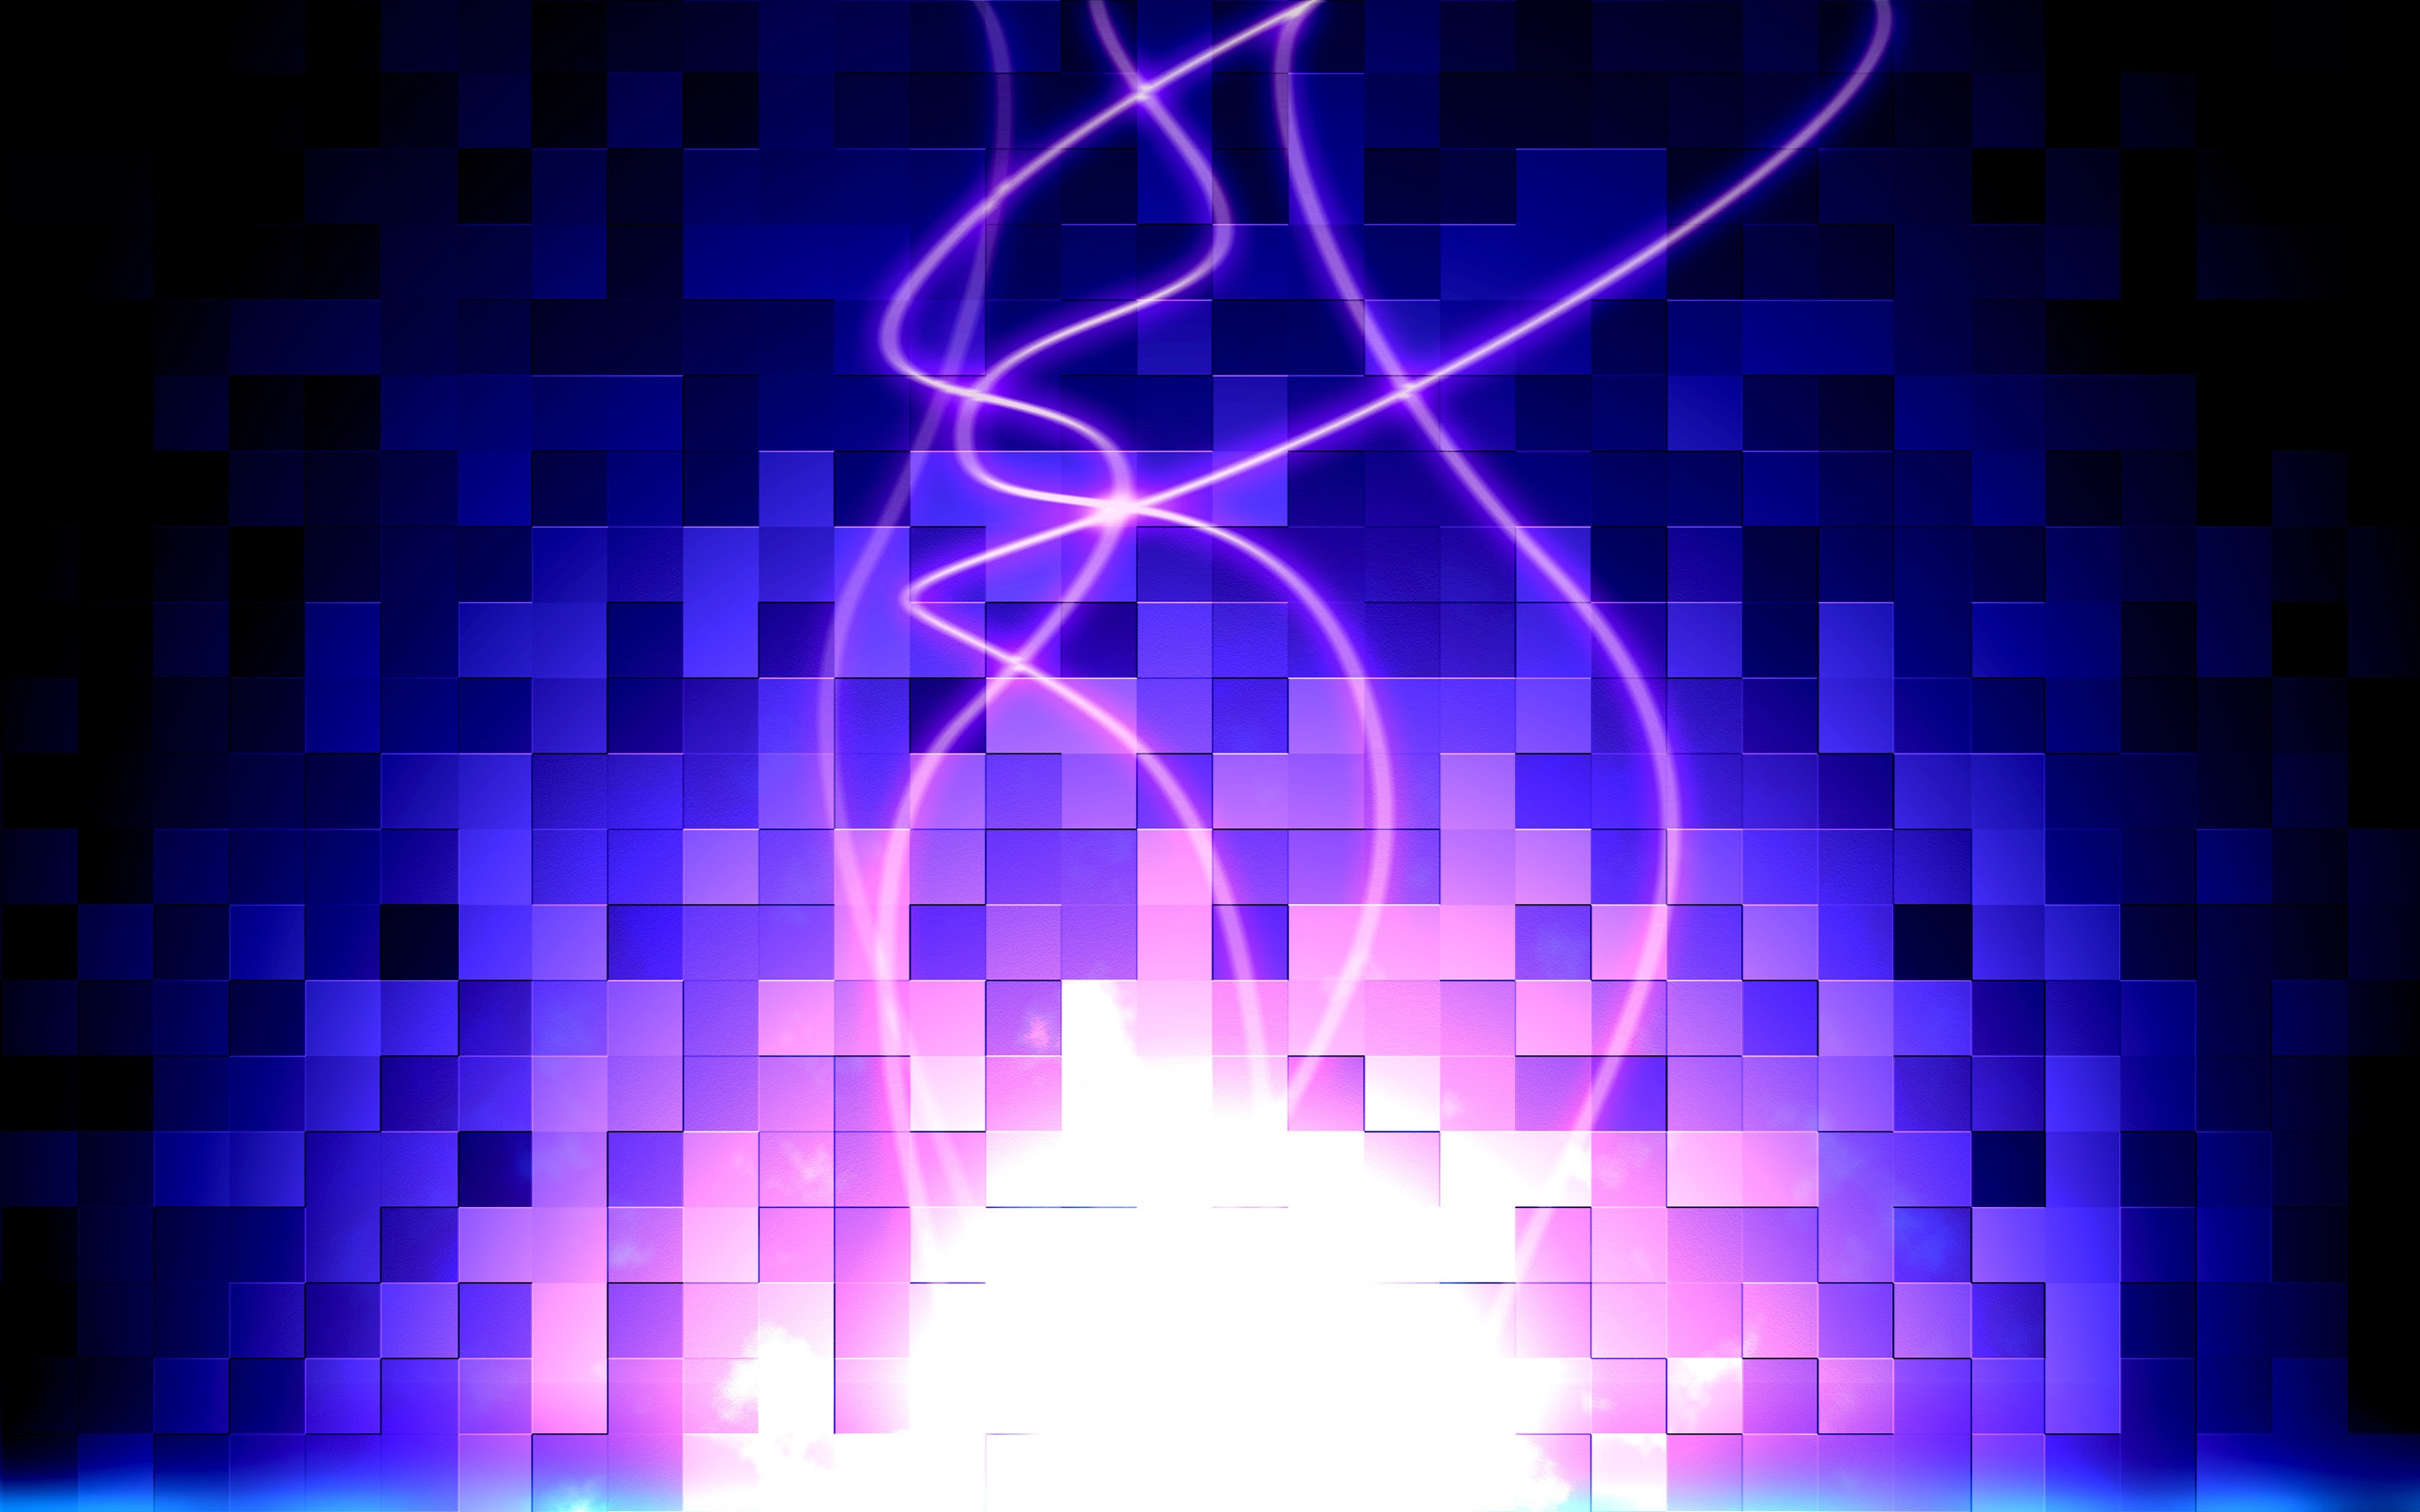 Blue and Purple Background Free Download | PixelsTalk.Net